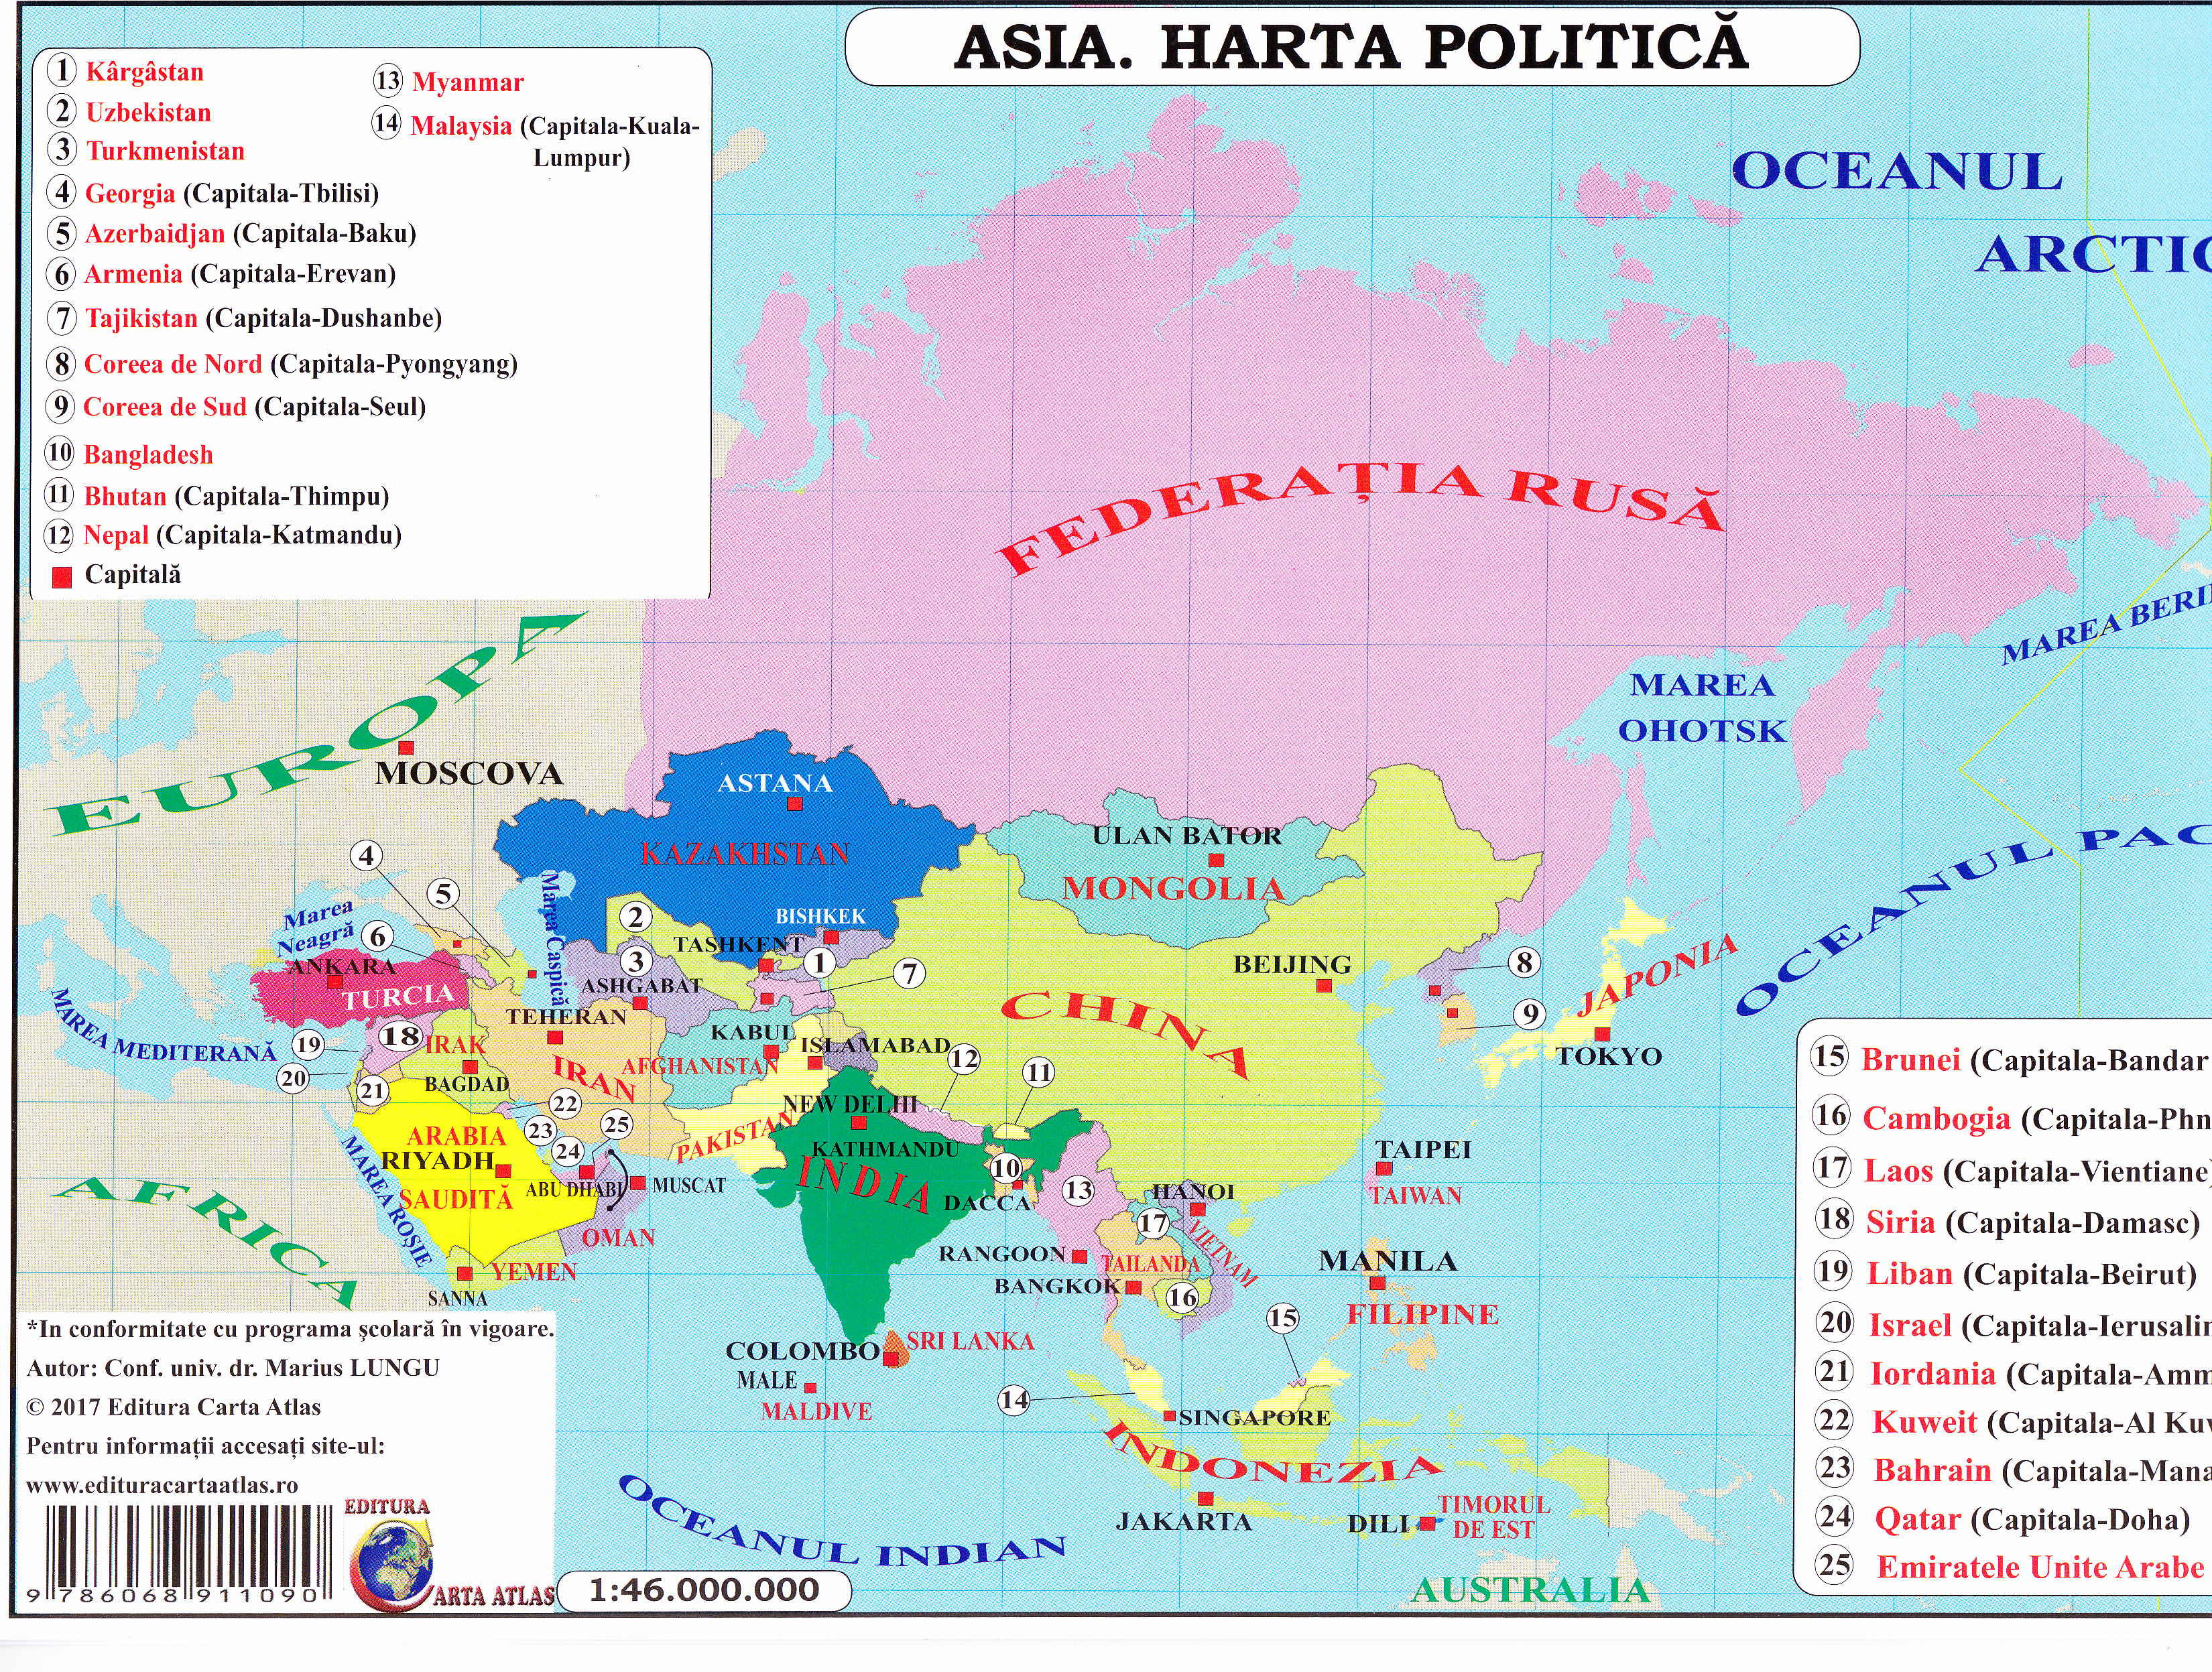 Asia - Harta Fizica + Harta Politica 1:46.000.000 (pliata)